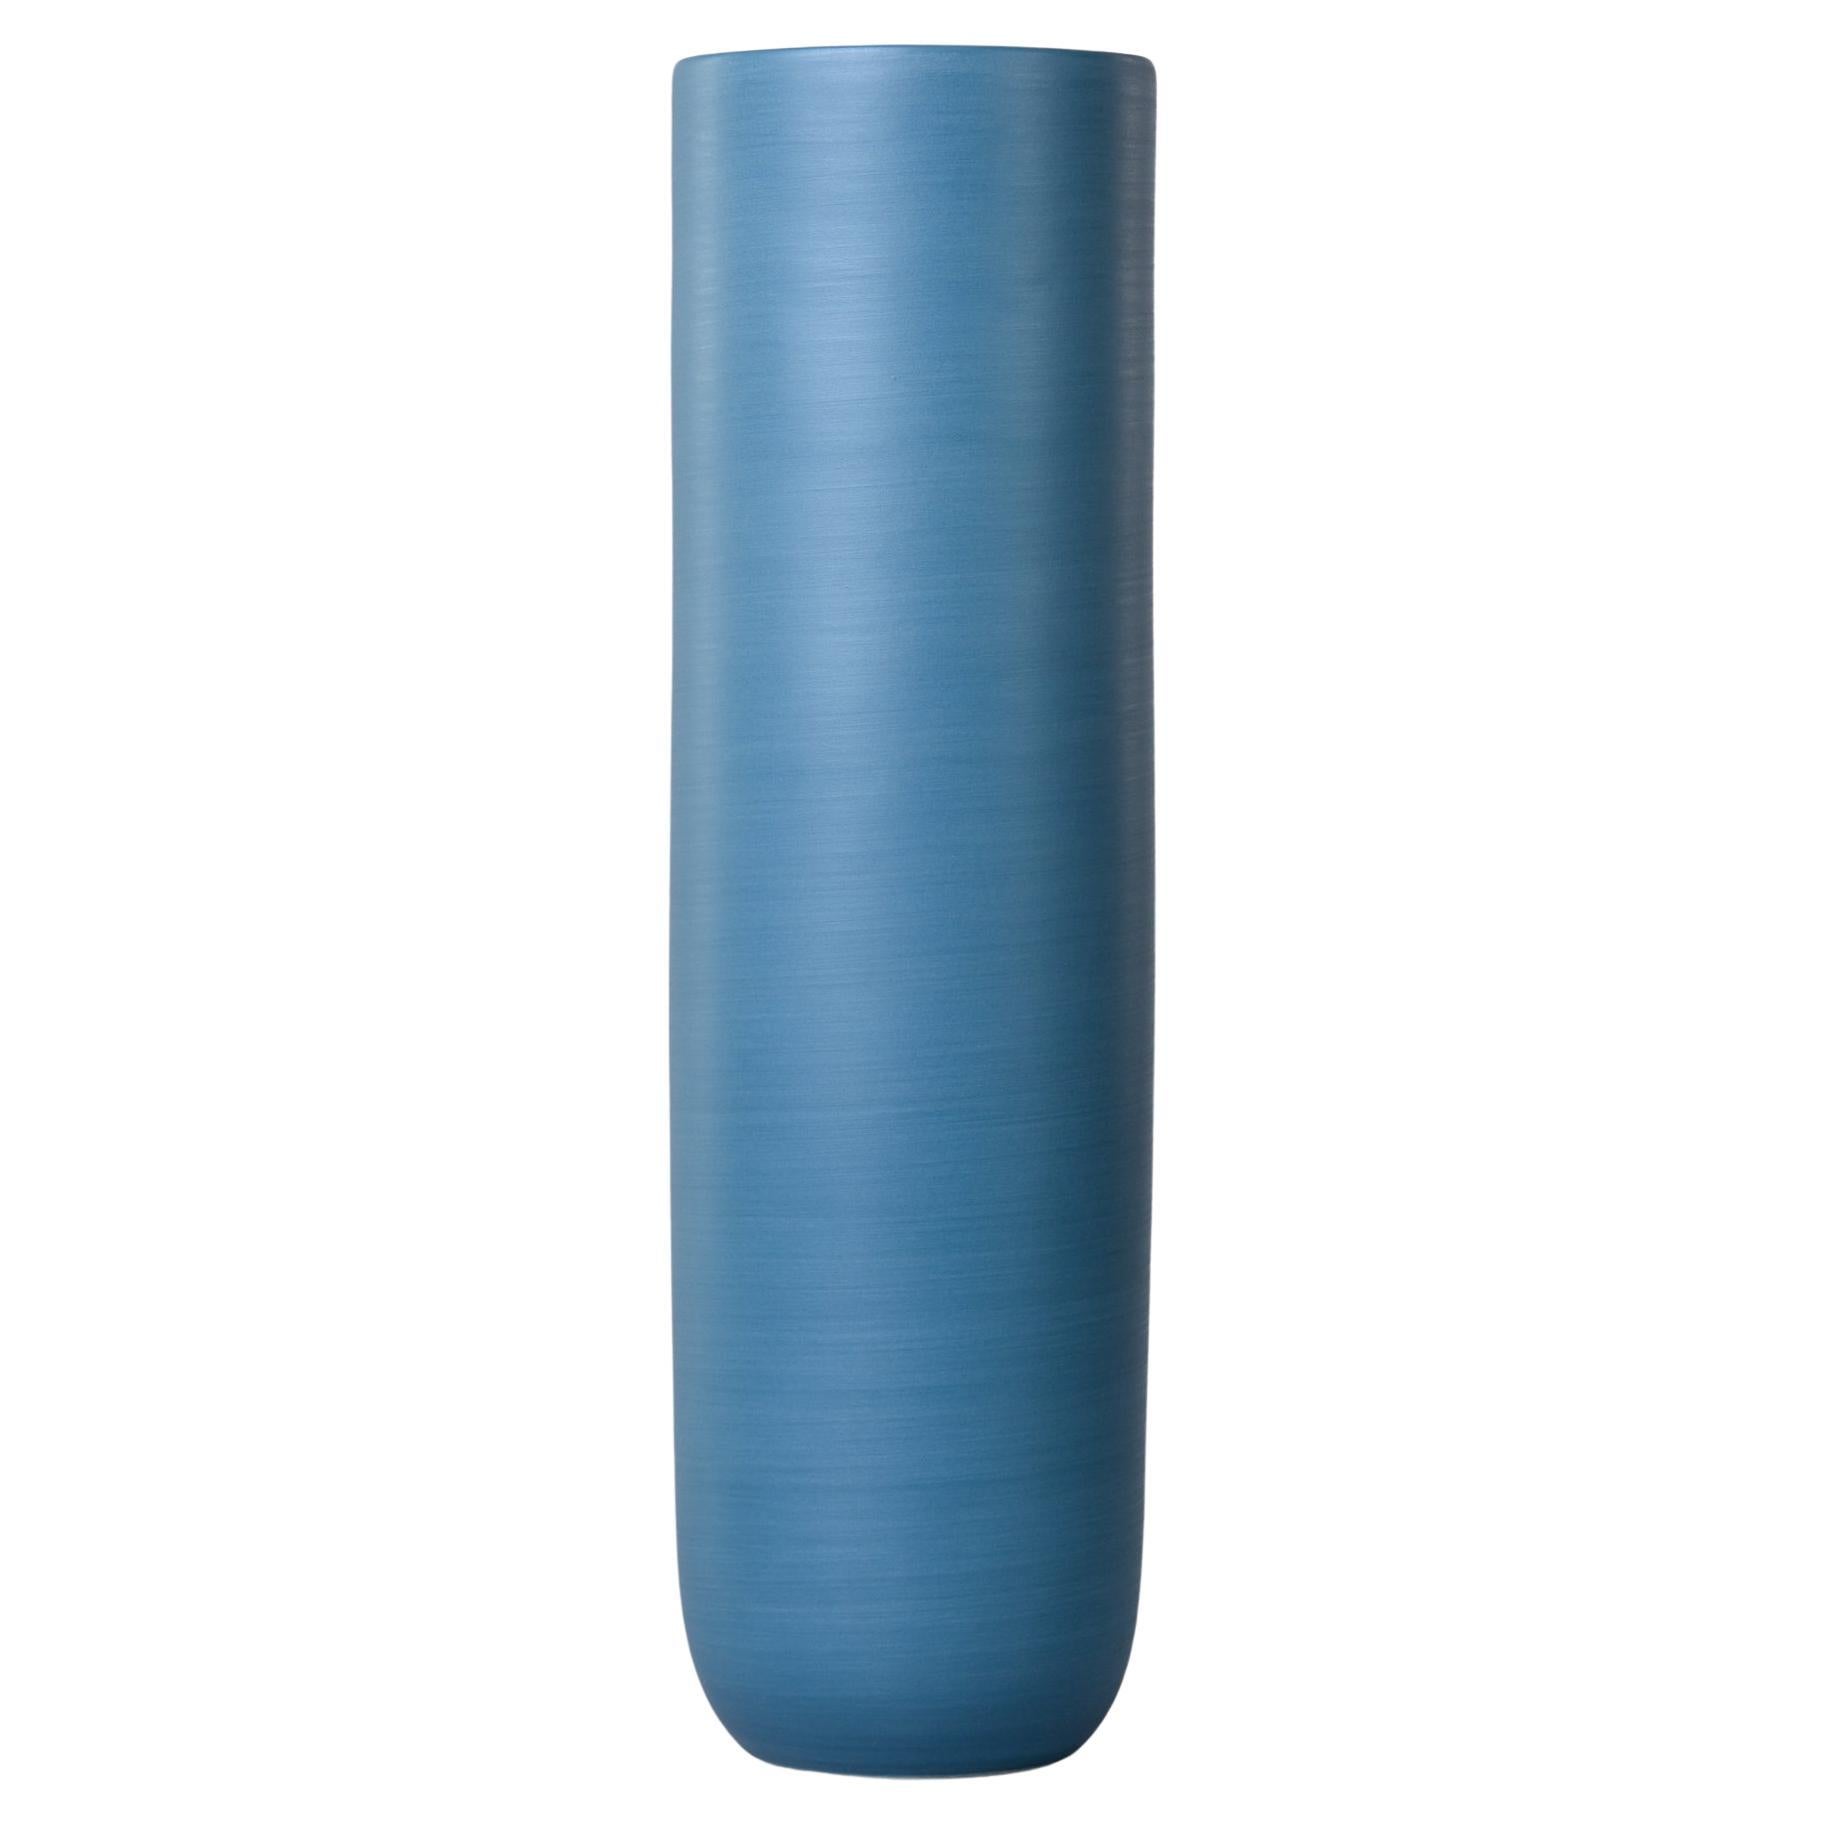 New Rina Menardi Canna 2 Vase in Teal Blue For Sale